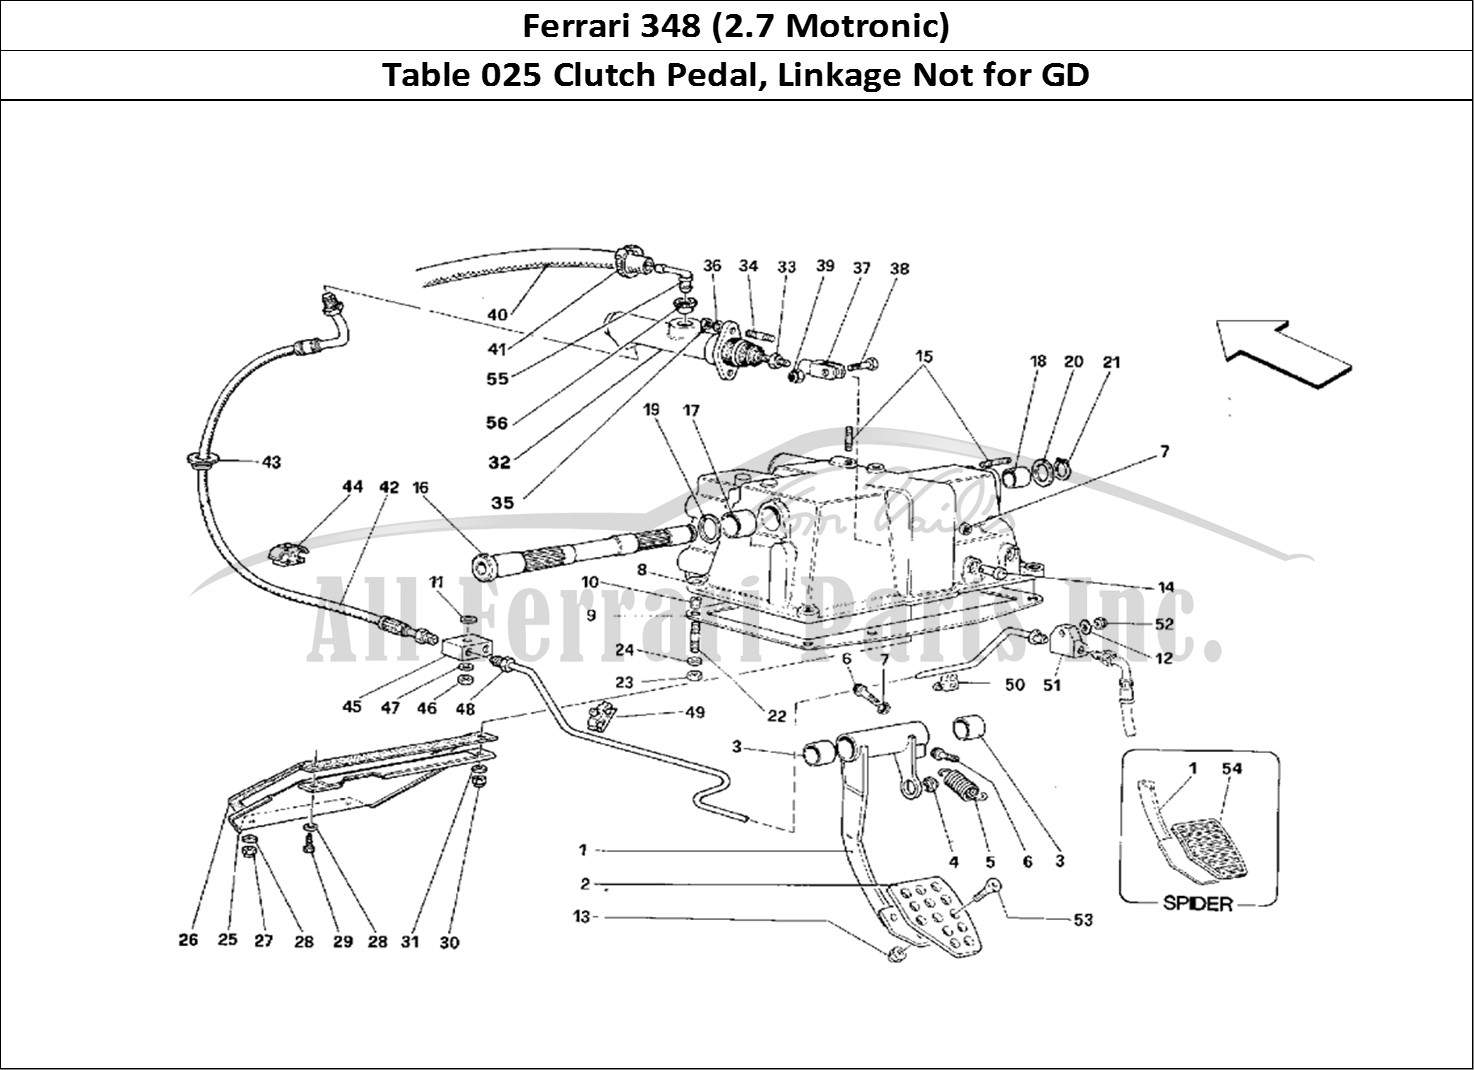 Ferrari Parts Ferrari 348 (2.7 Motronic) Page 025 Clutch Release Control -N